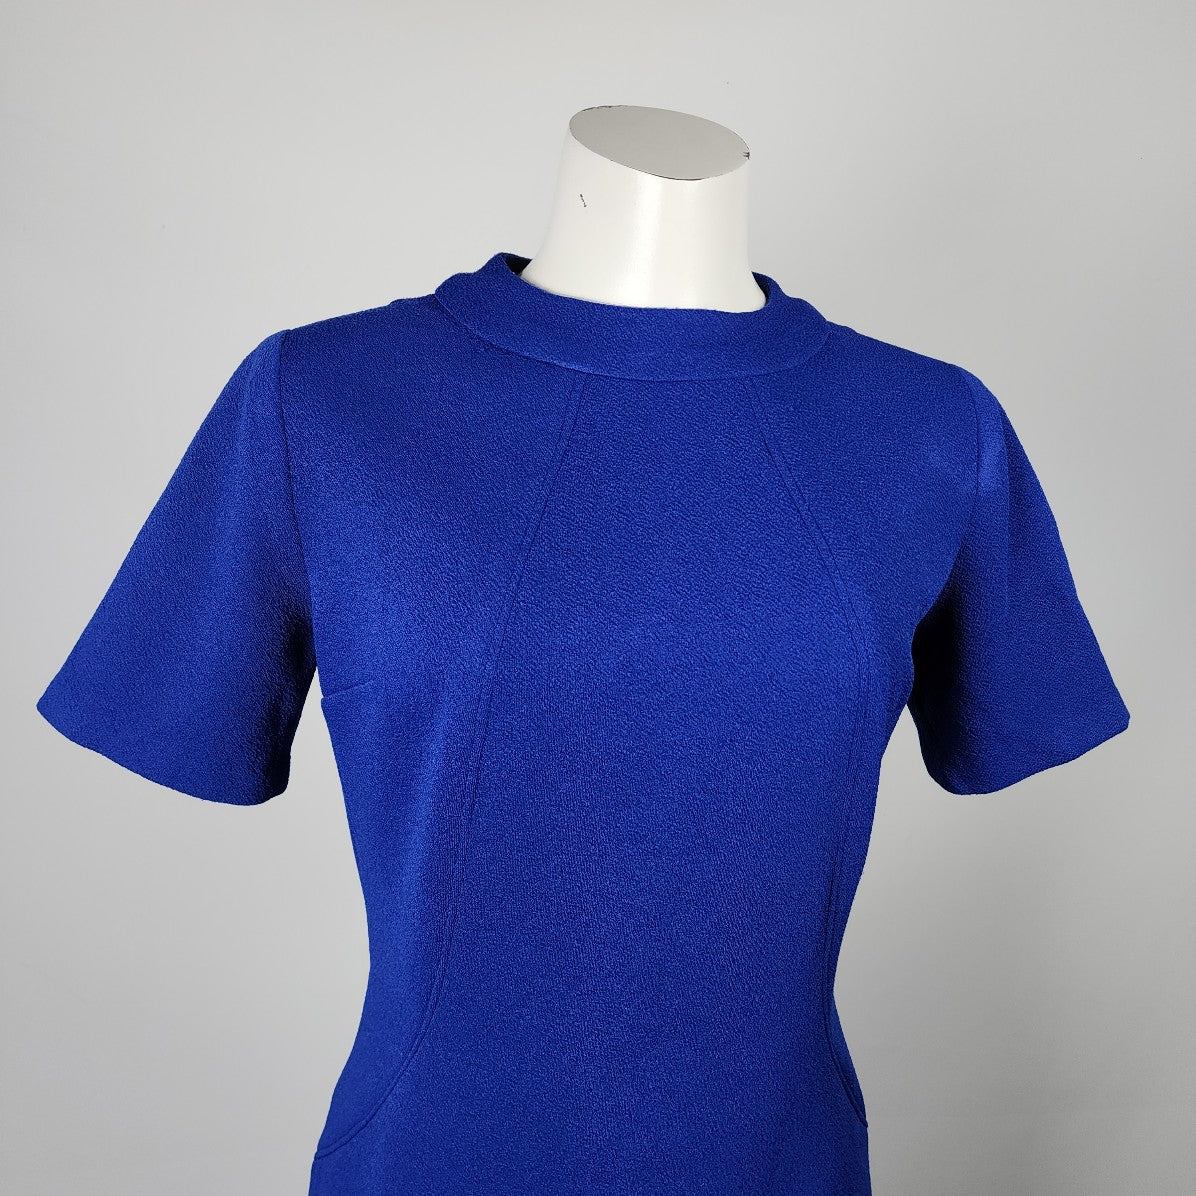 Vintage Blue Short Sleeve Sheath Dress Size S/M